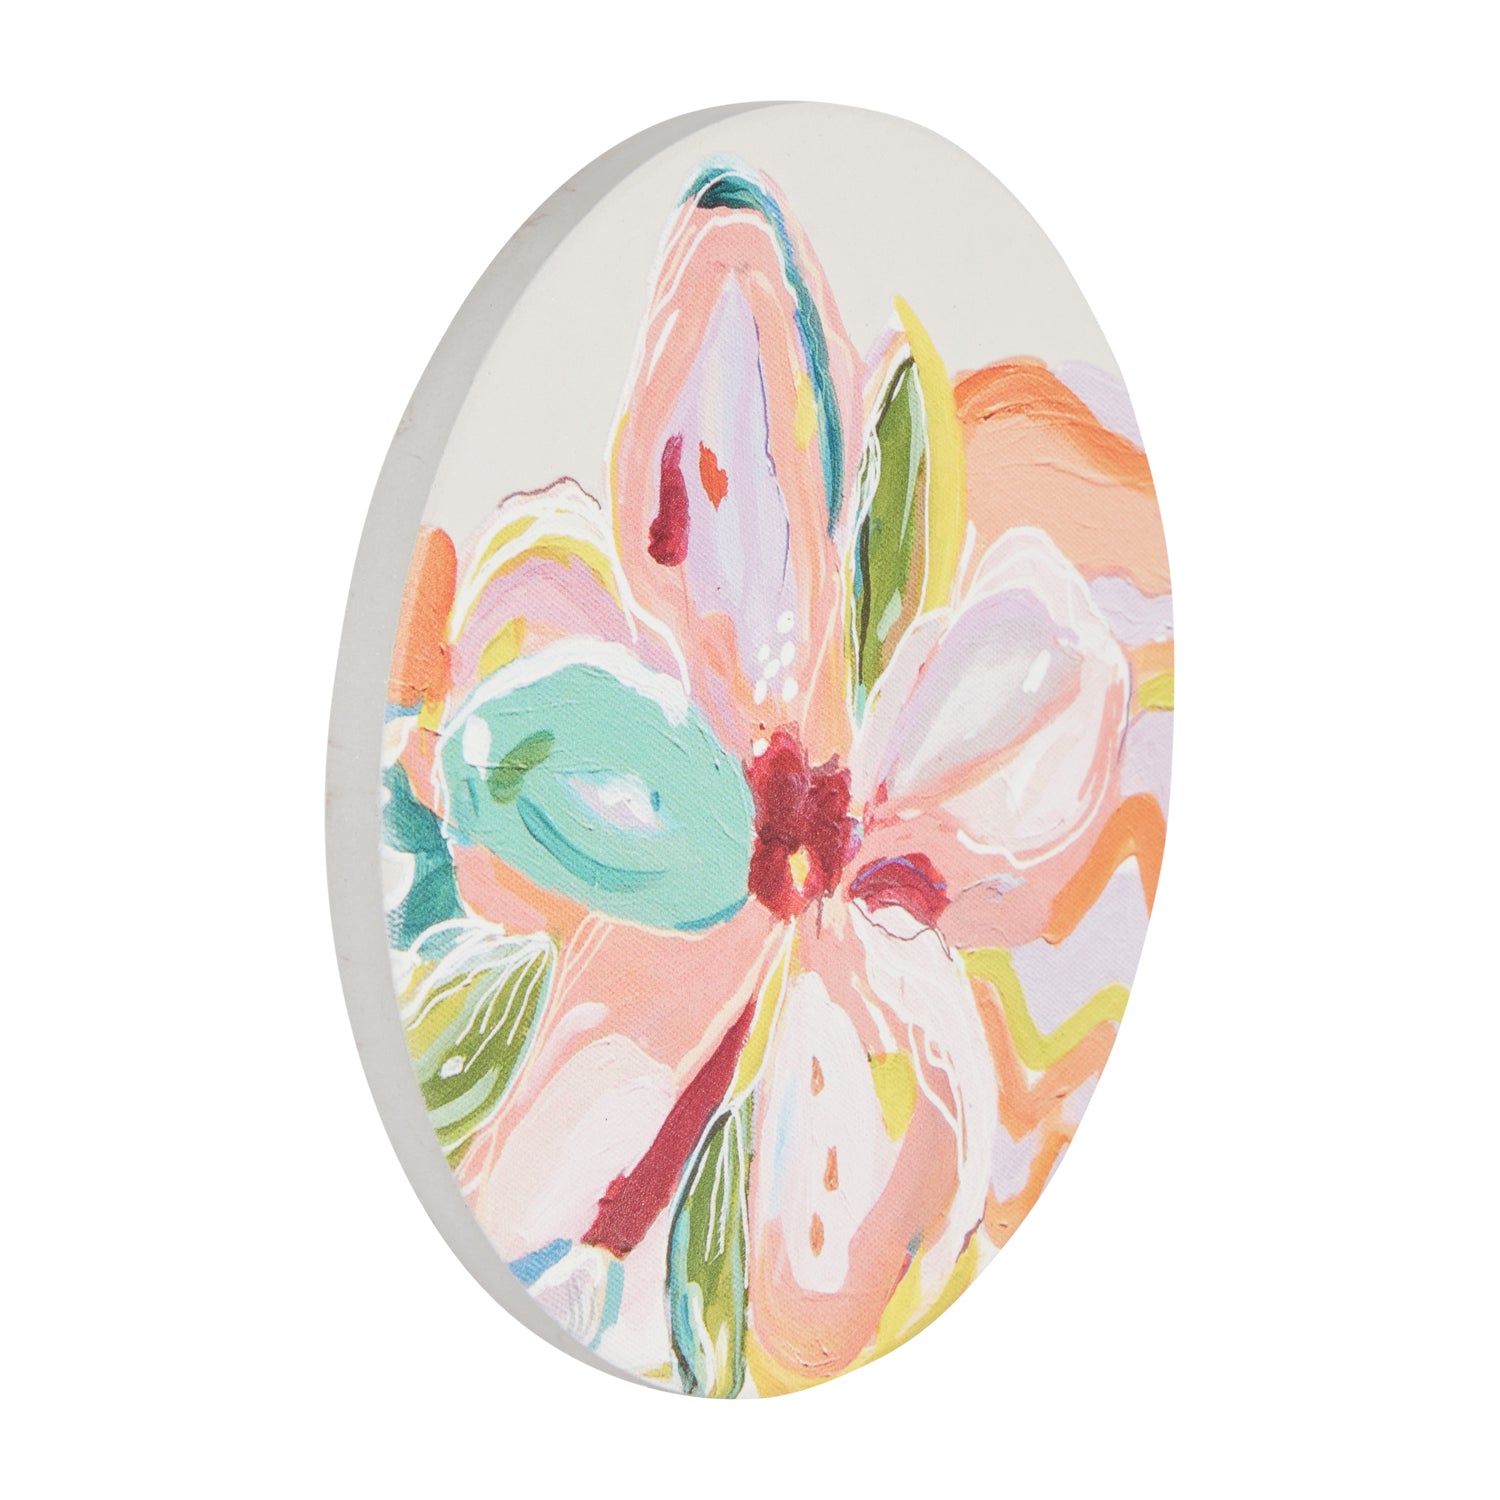 Splosh - Talulah - Ceramic Coaster - Floral Swirl